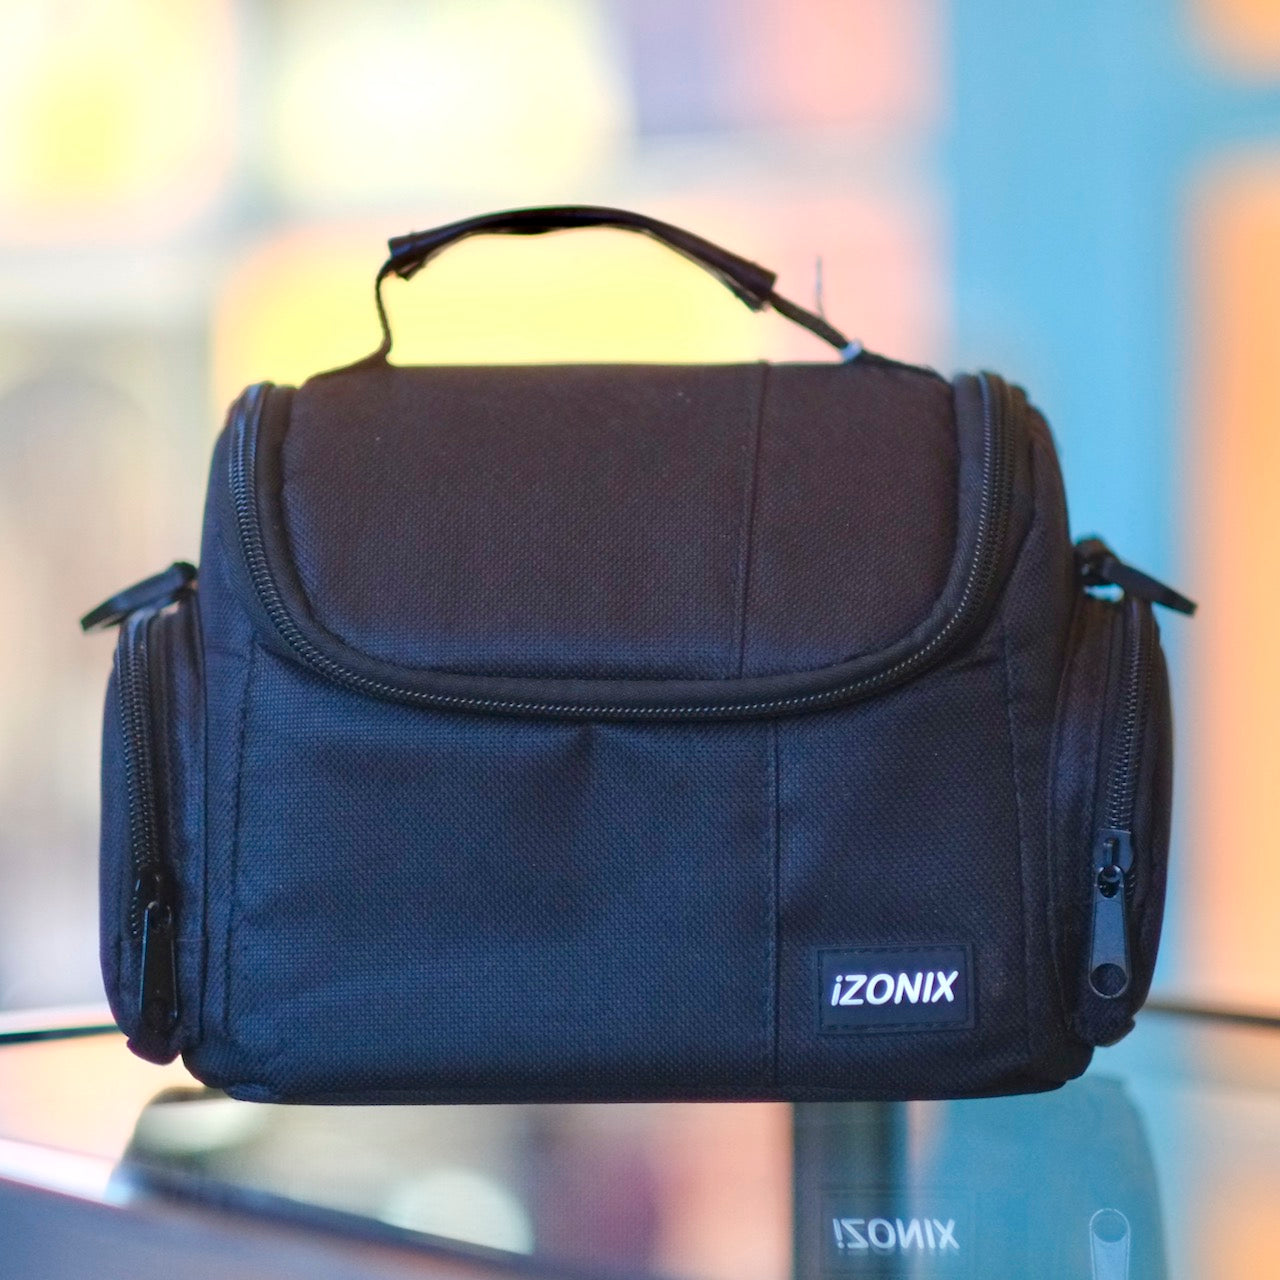 iZonix Camera Bag